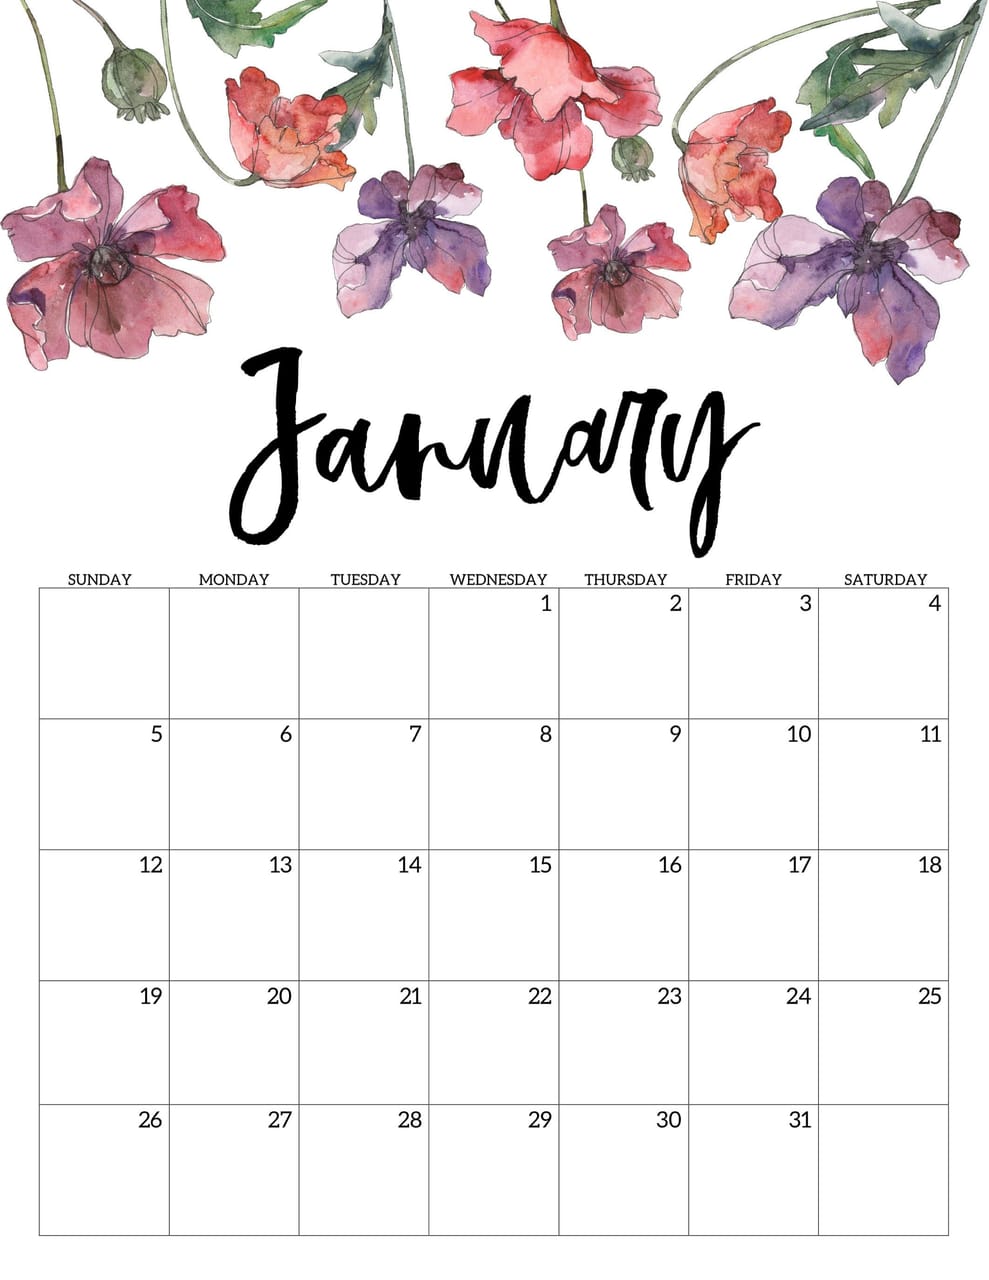 Cute January 2020 Calendar Wallpaper on We Heart It